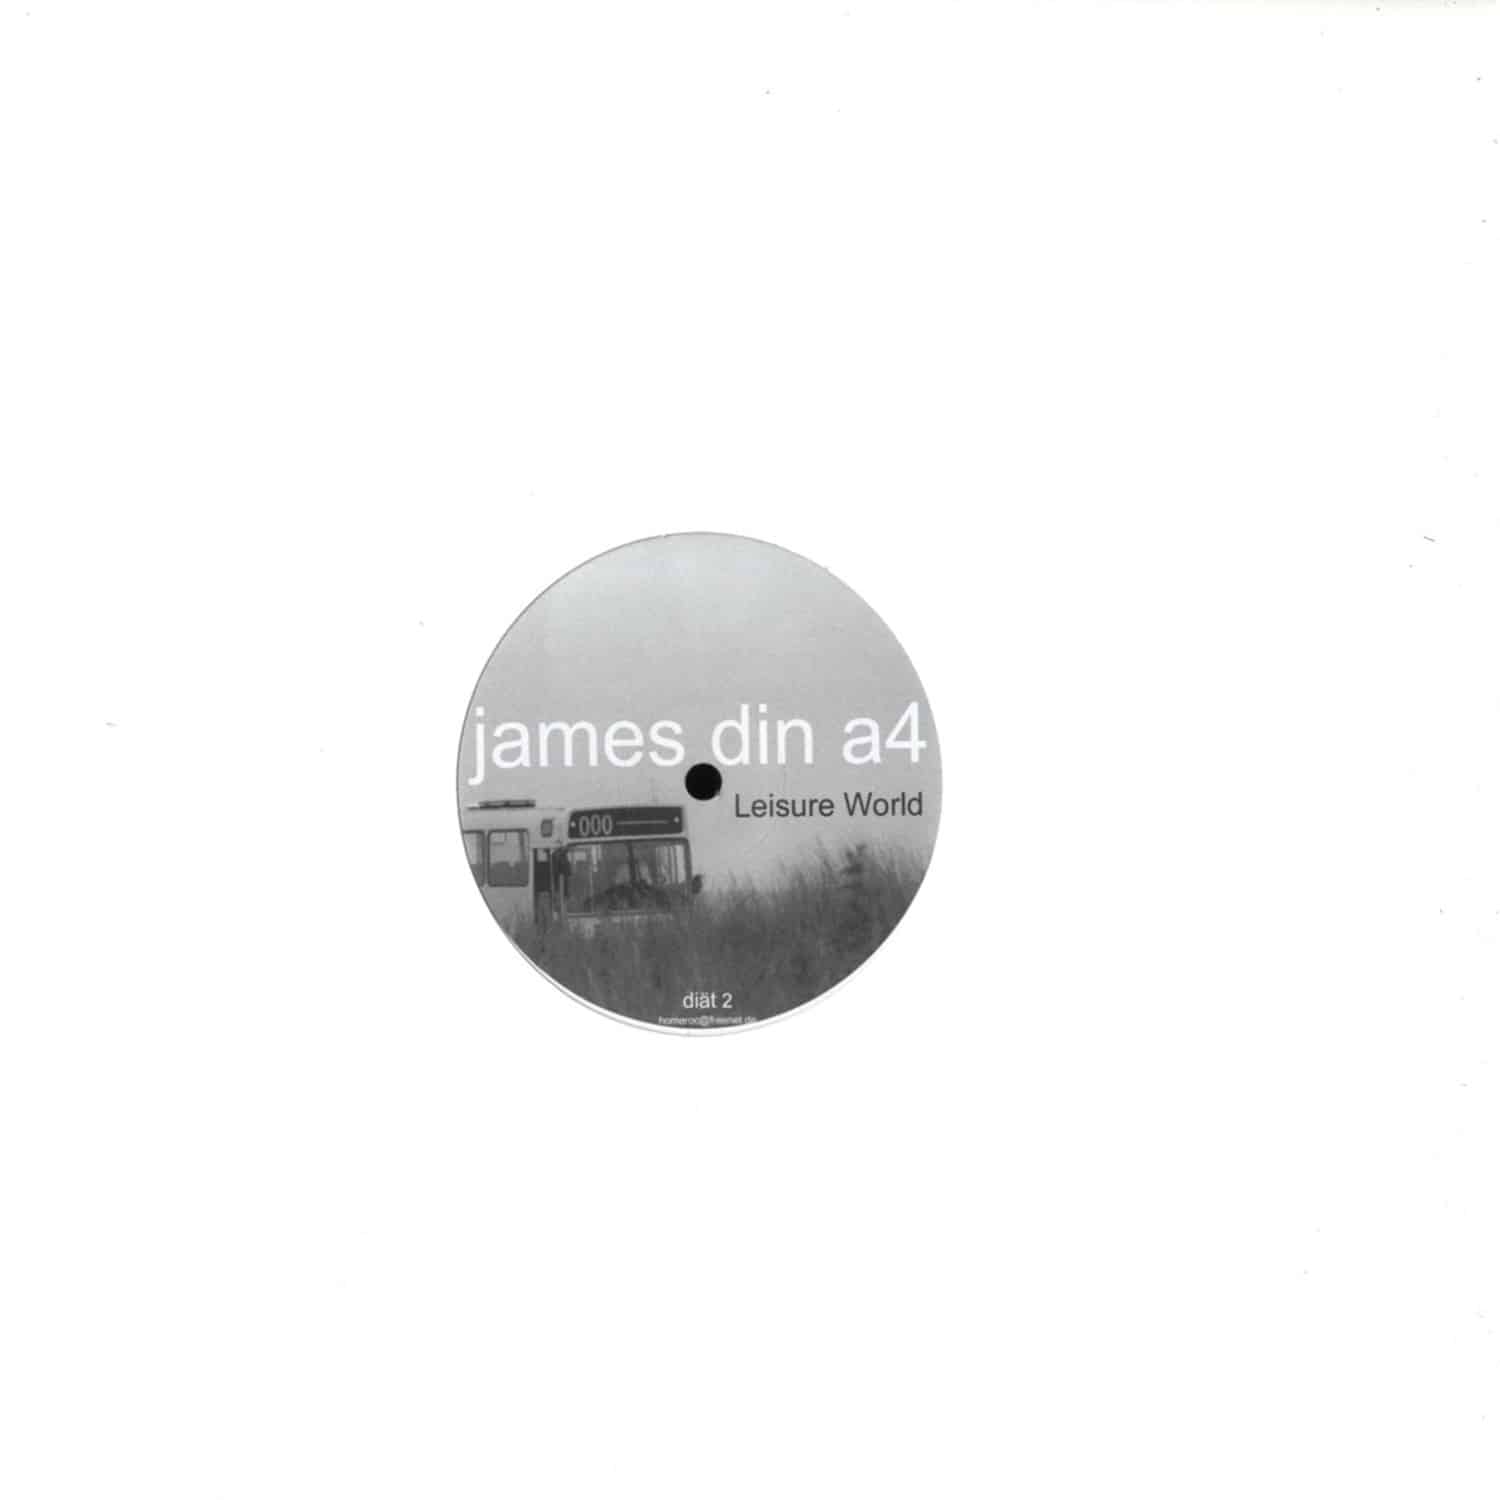 James Din A 4 - LEISURE WORLD